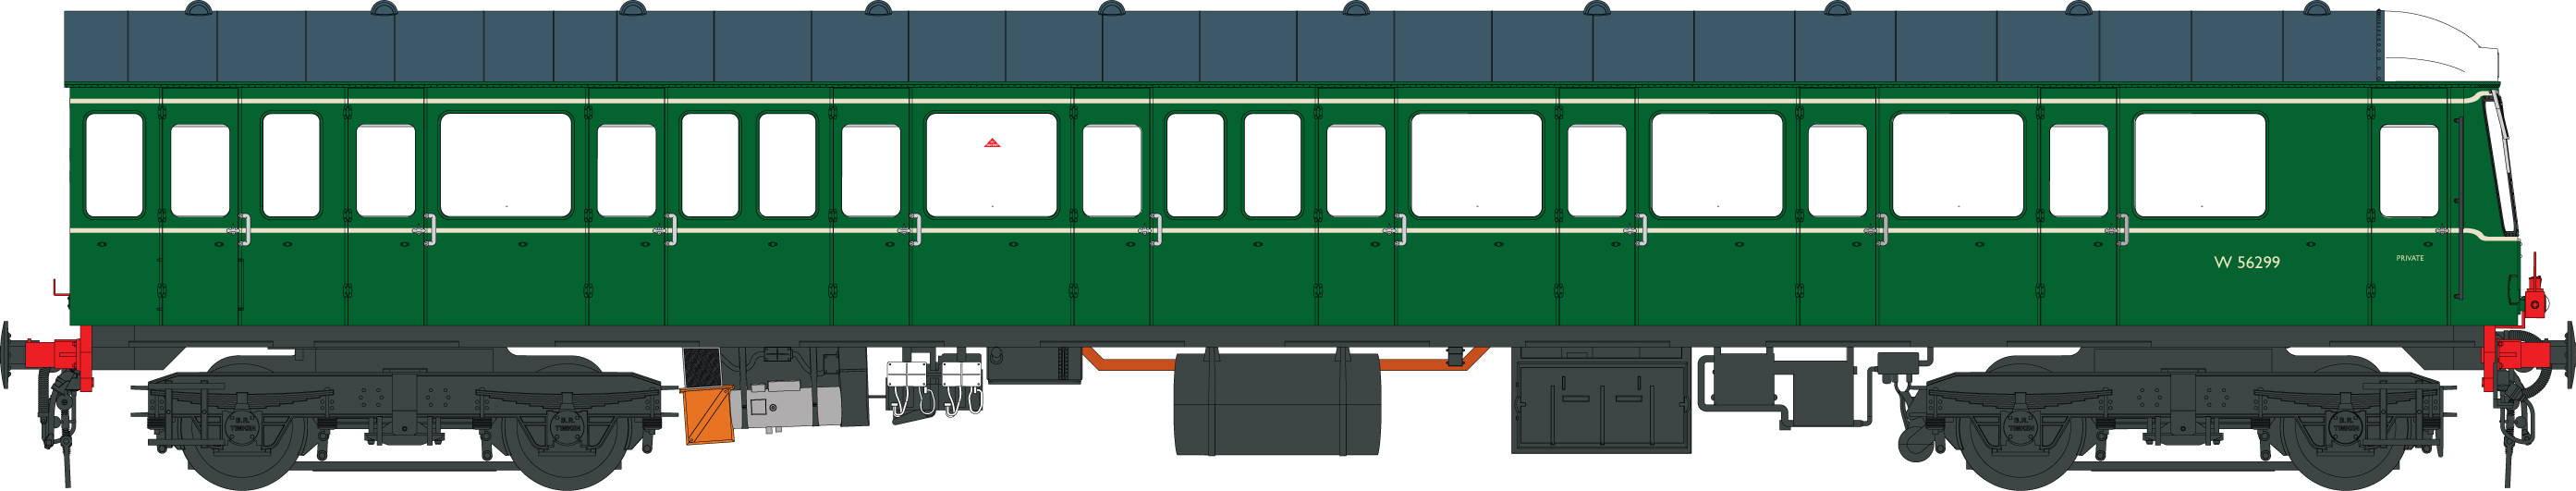 1250 Heljan Class 150 Driving Trailer BR green W56299